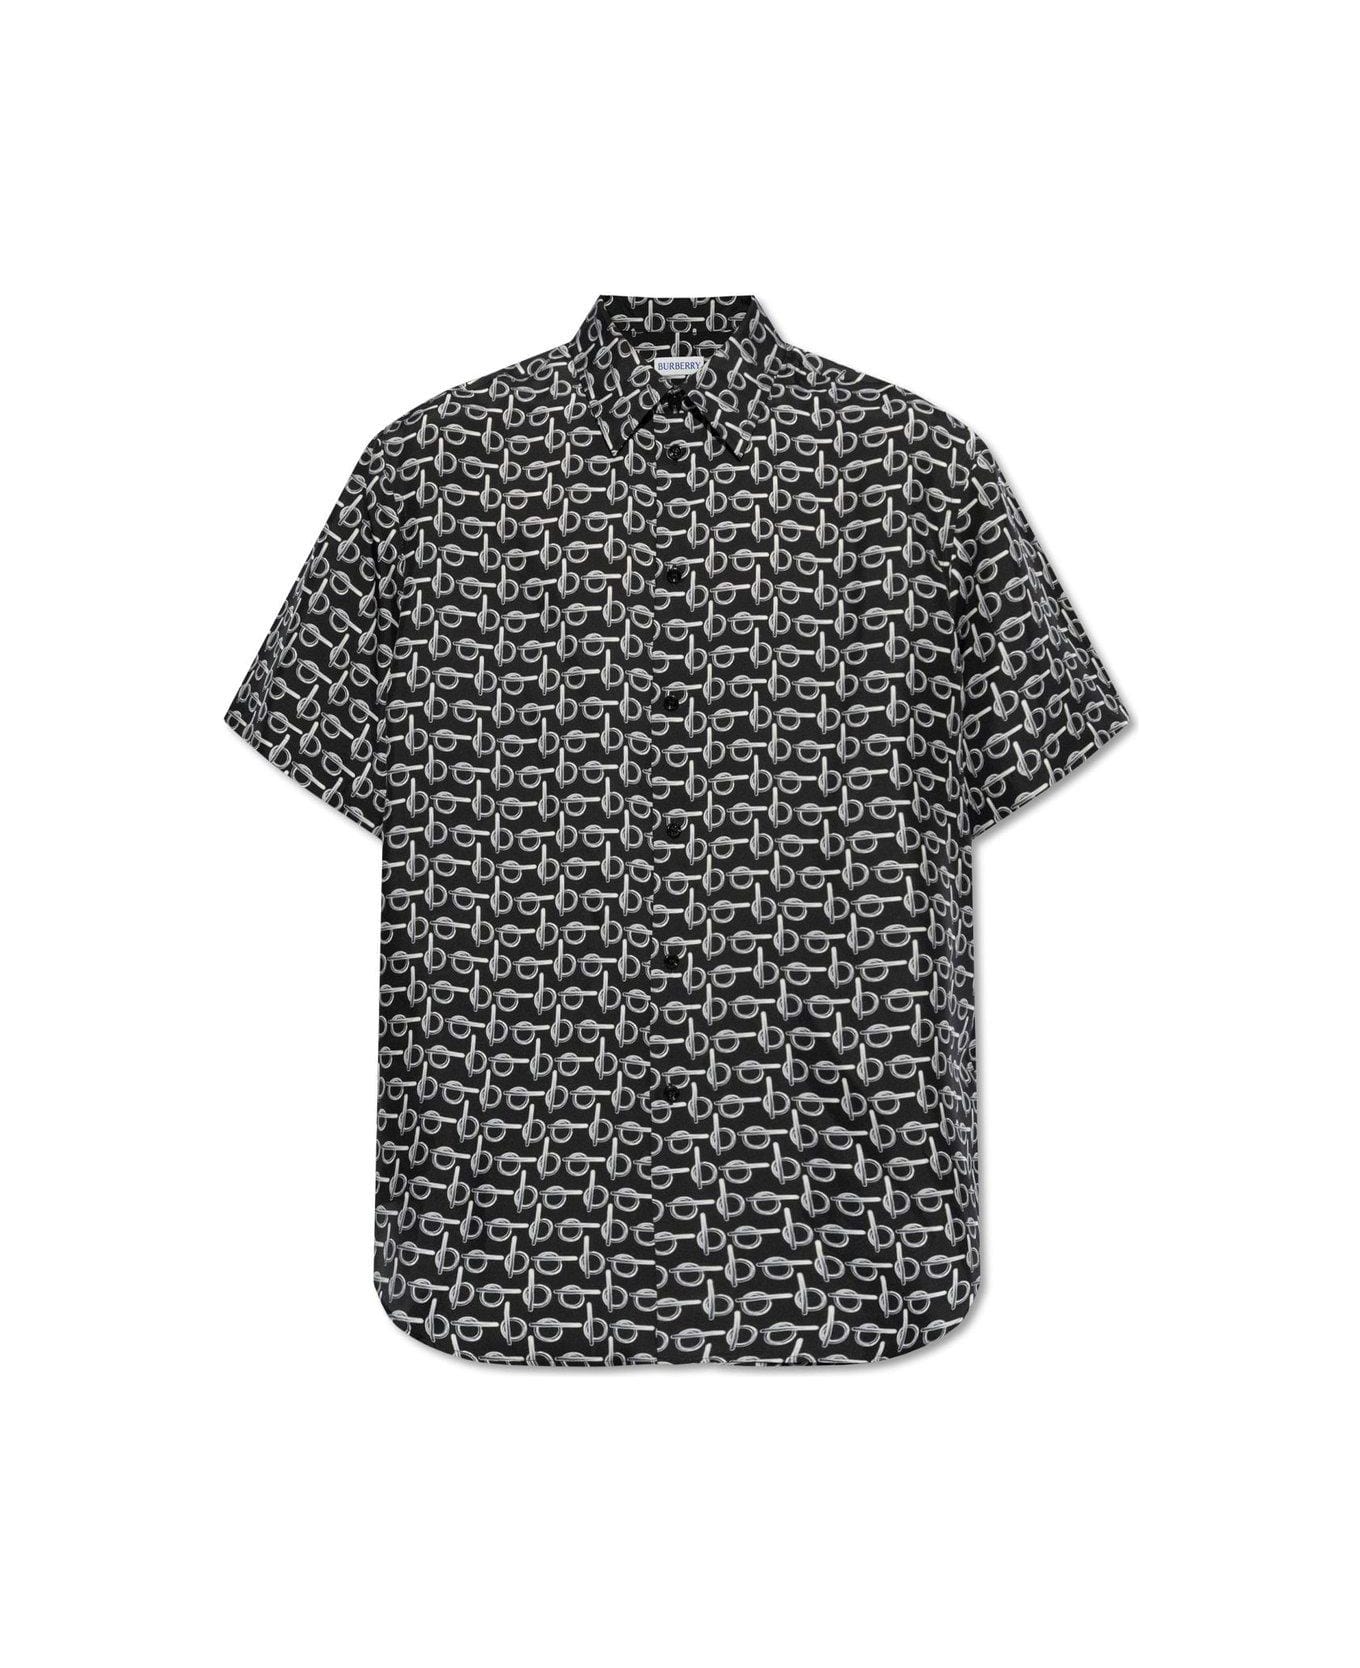 Burberry Monogram Printed Short Sleeved Shirt - Silver/black